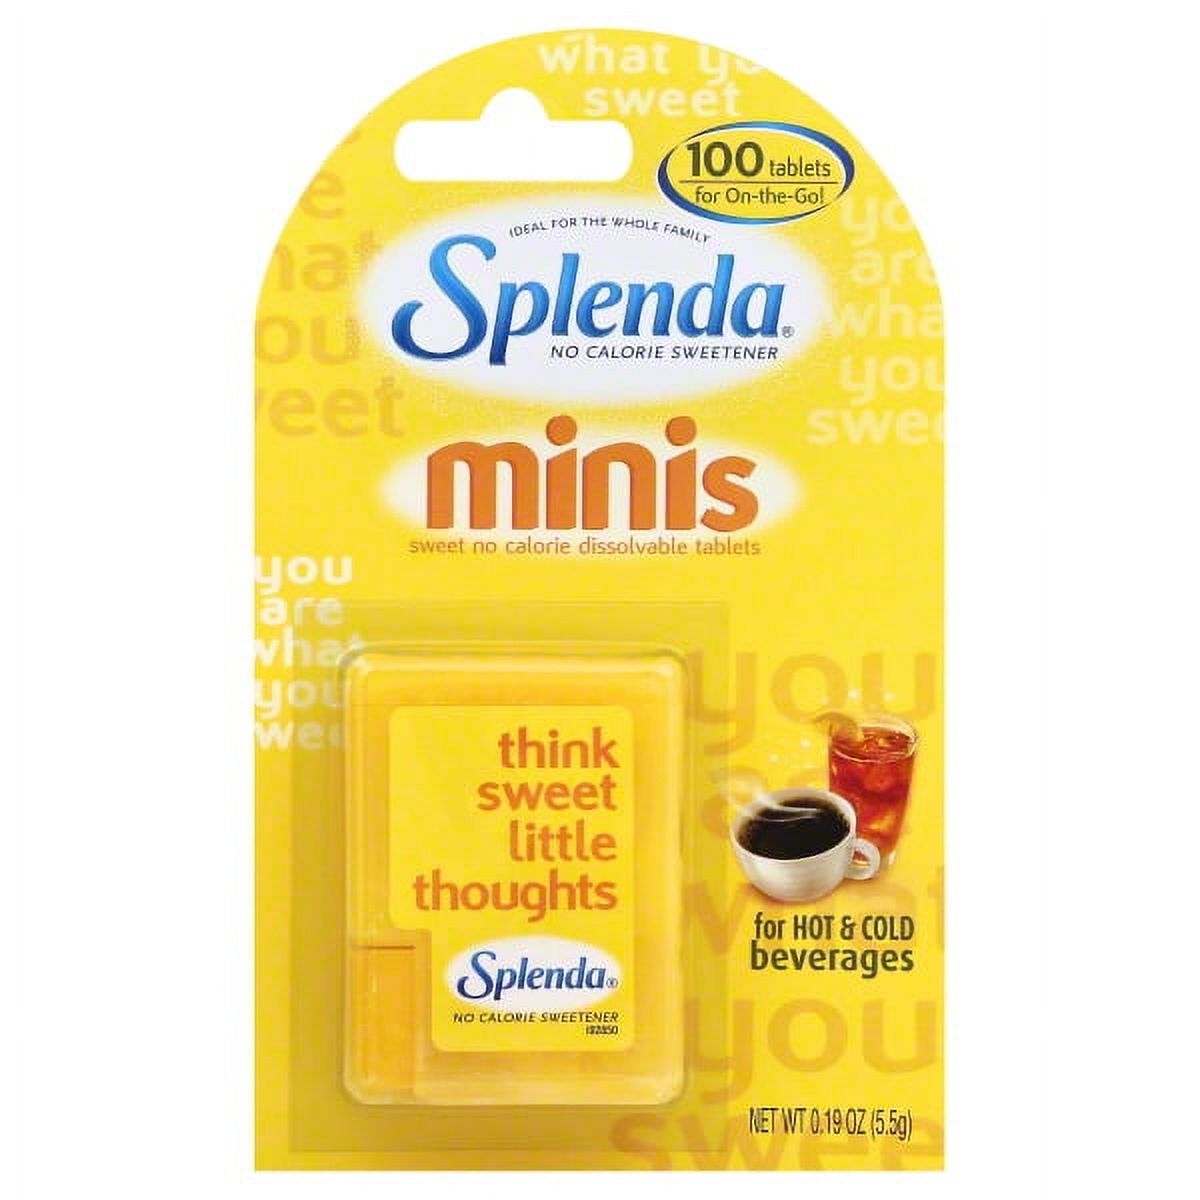 Splenda No Calorie Sweetener Minis Dissolvable Tablets, 100 ct. - image 1 of 5